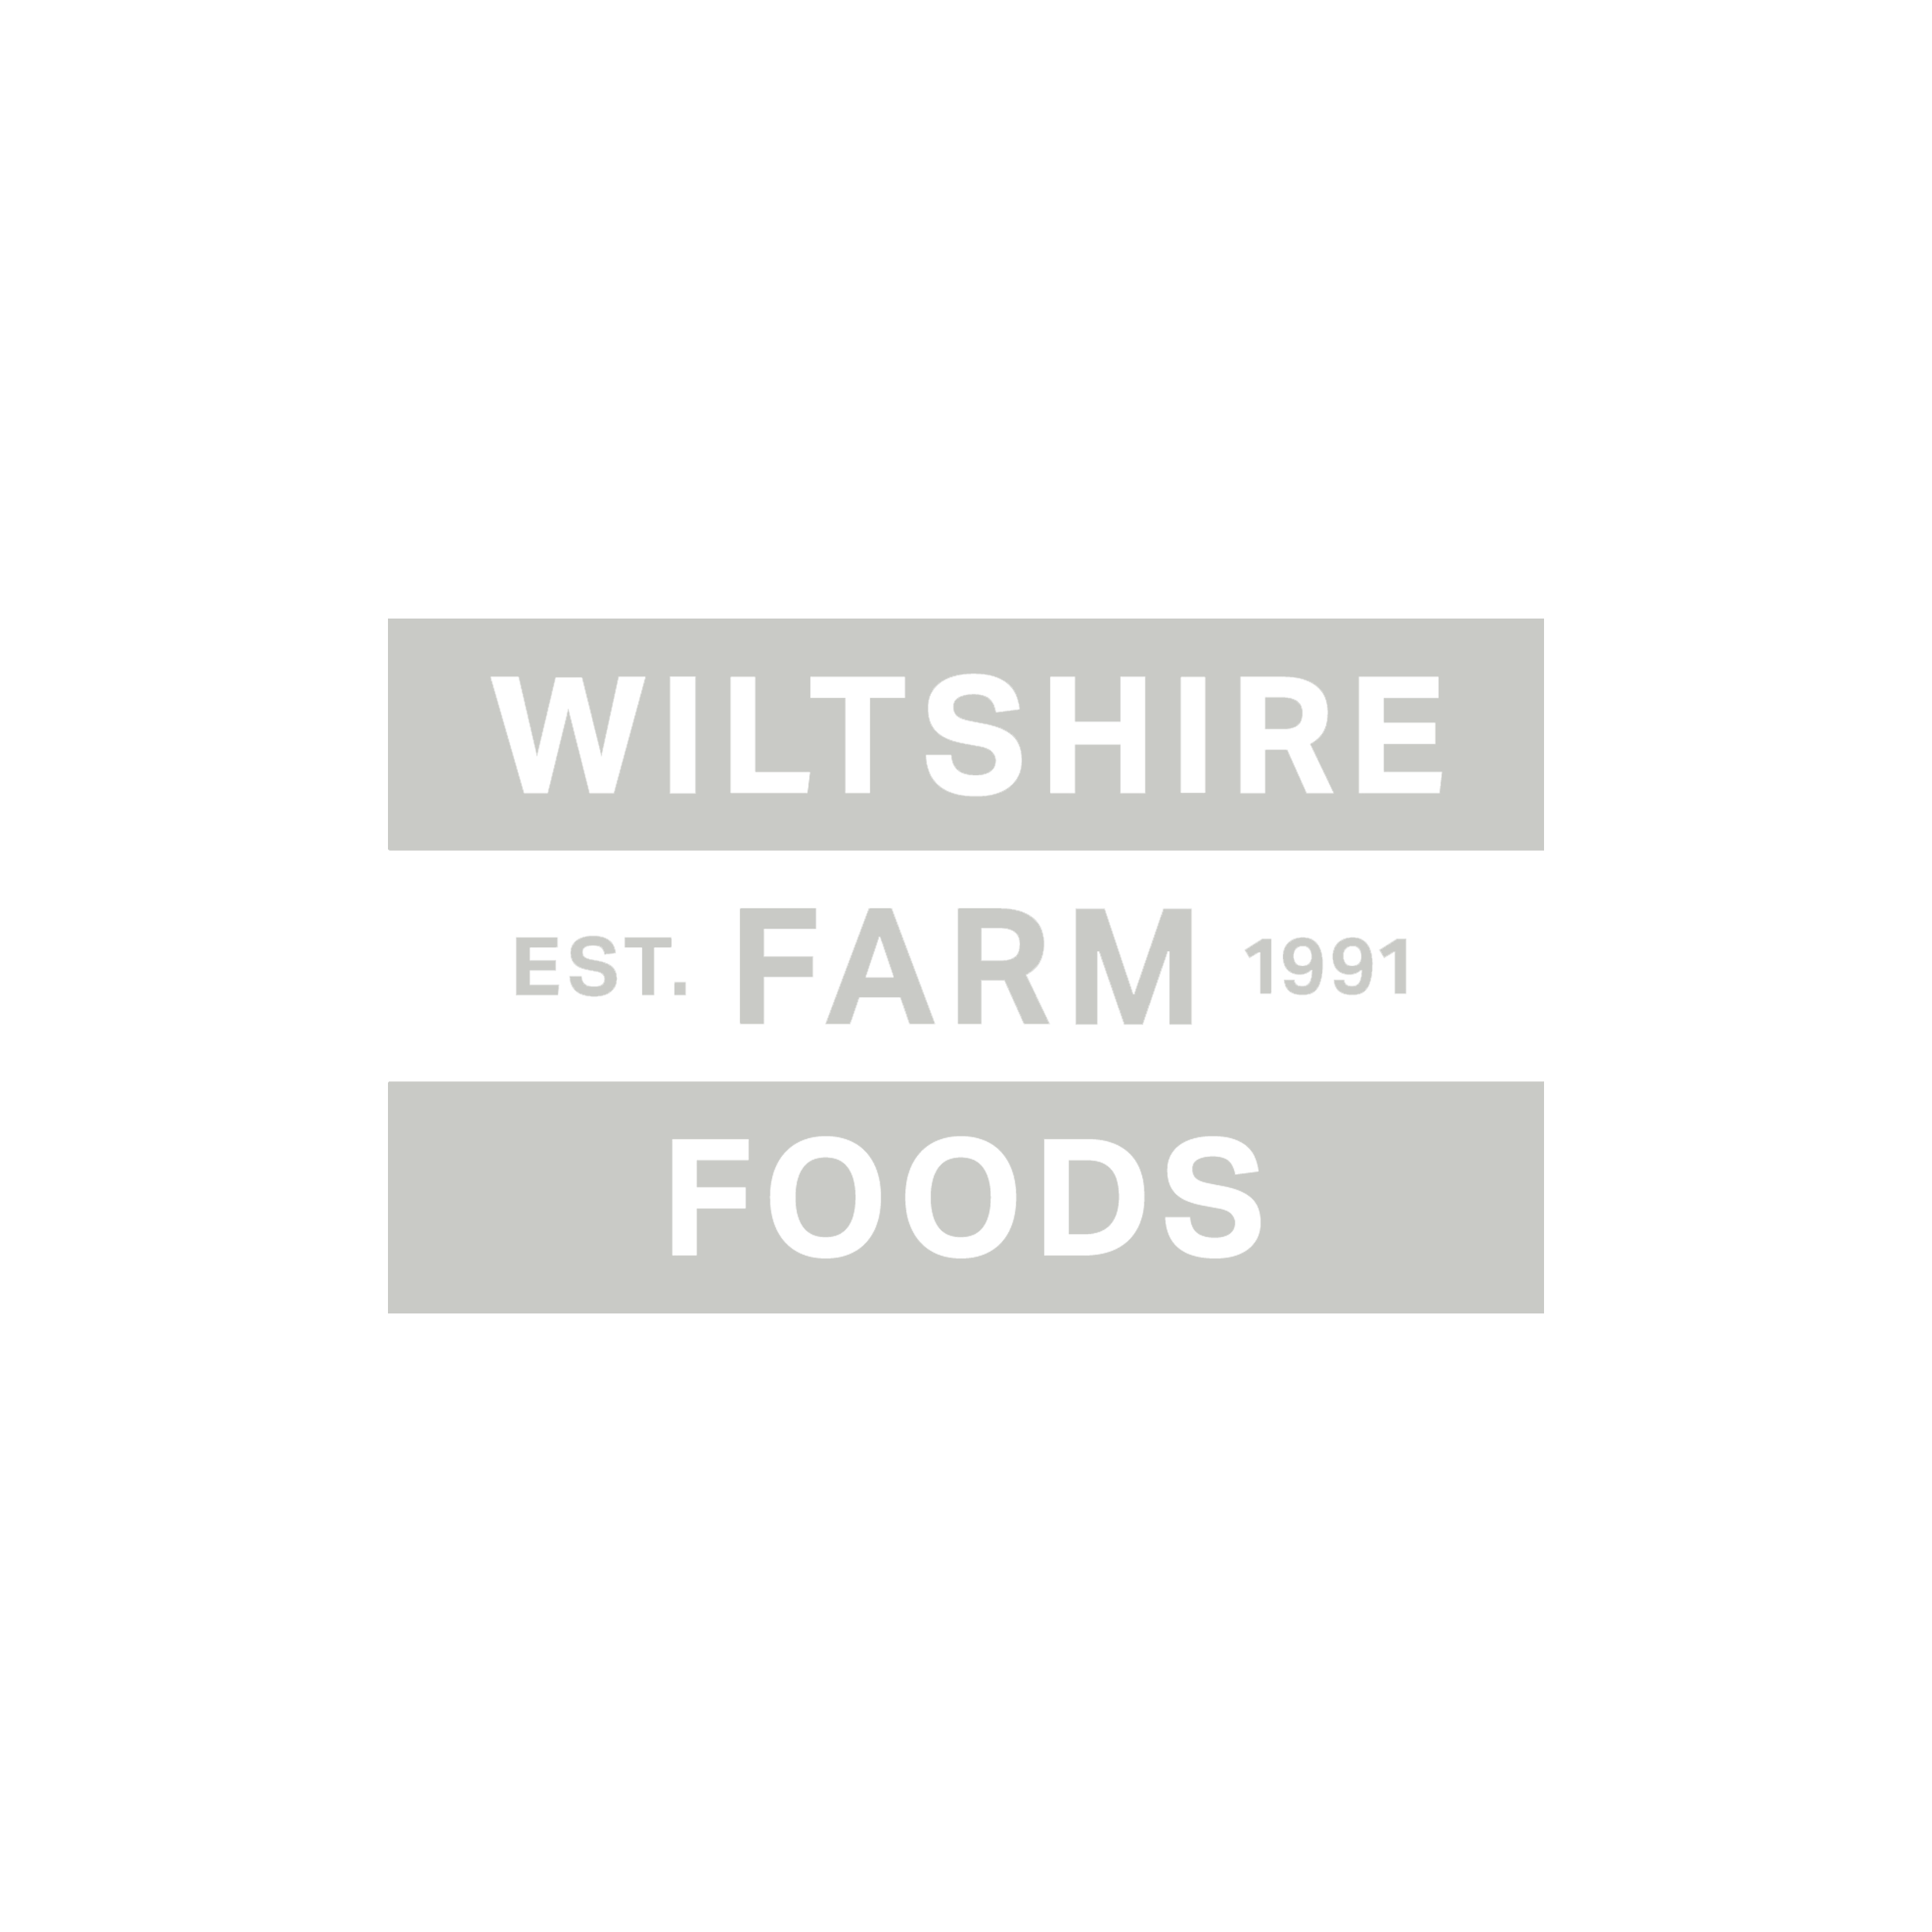 Wiltshire-Farm-Foods | Circus